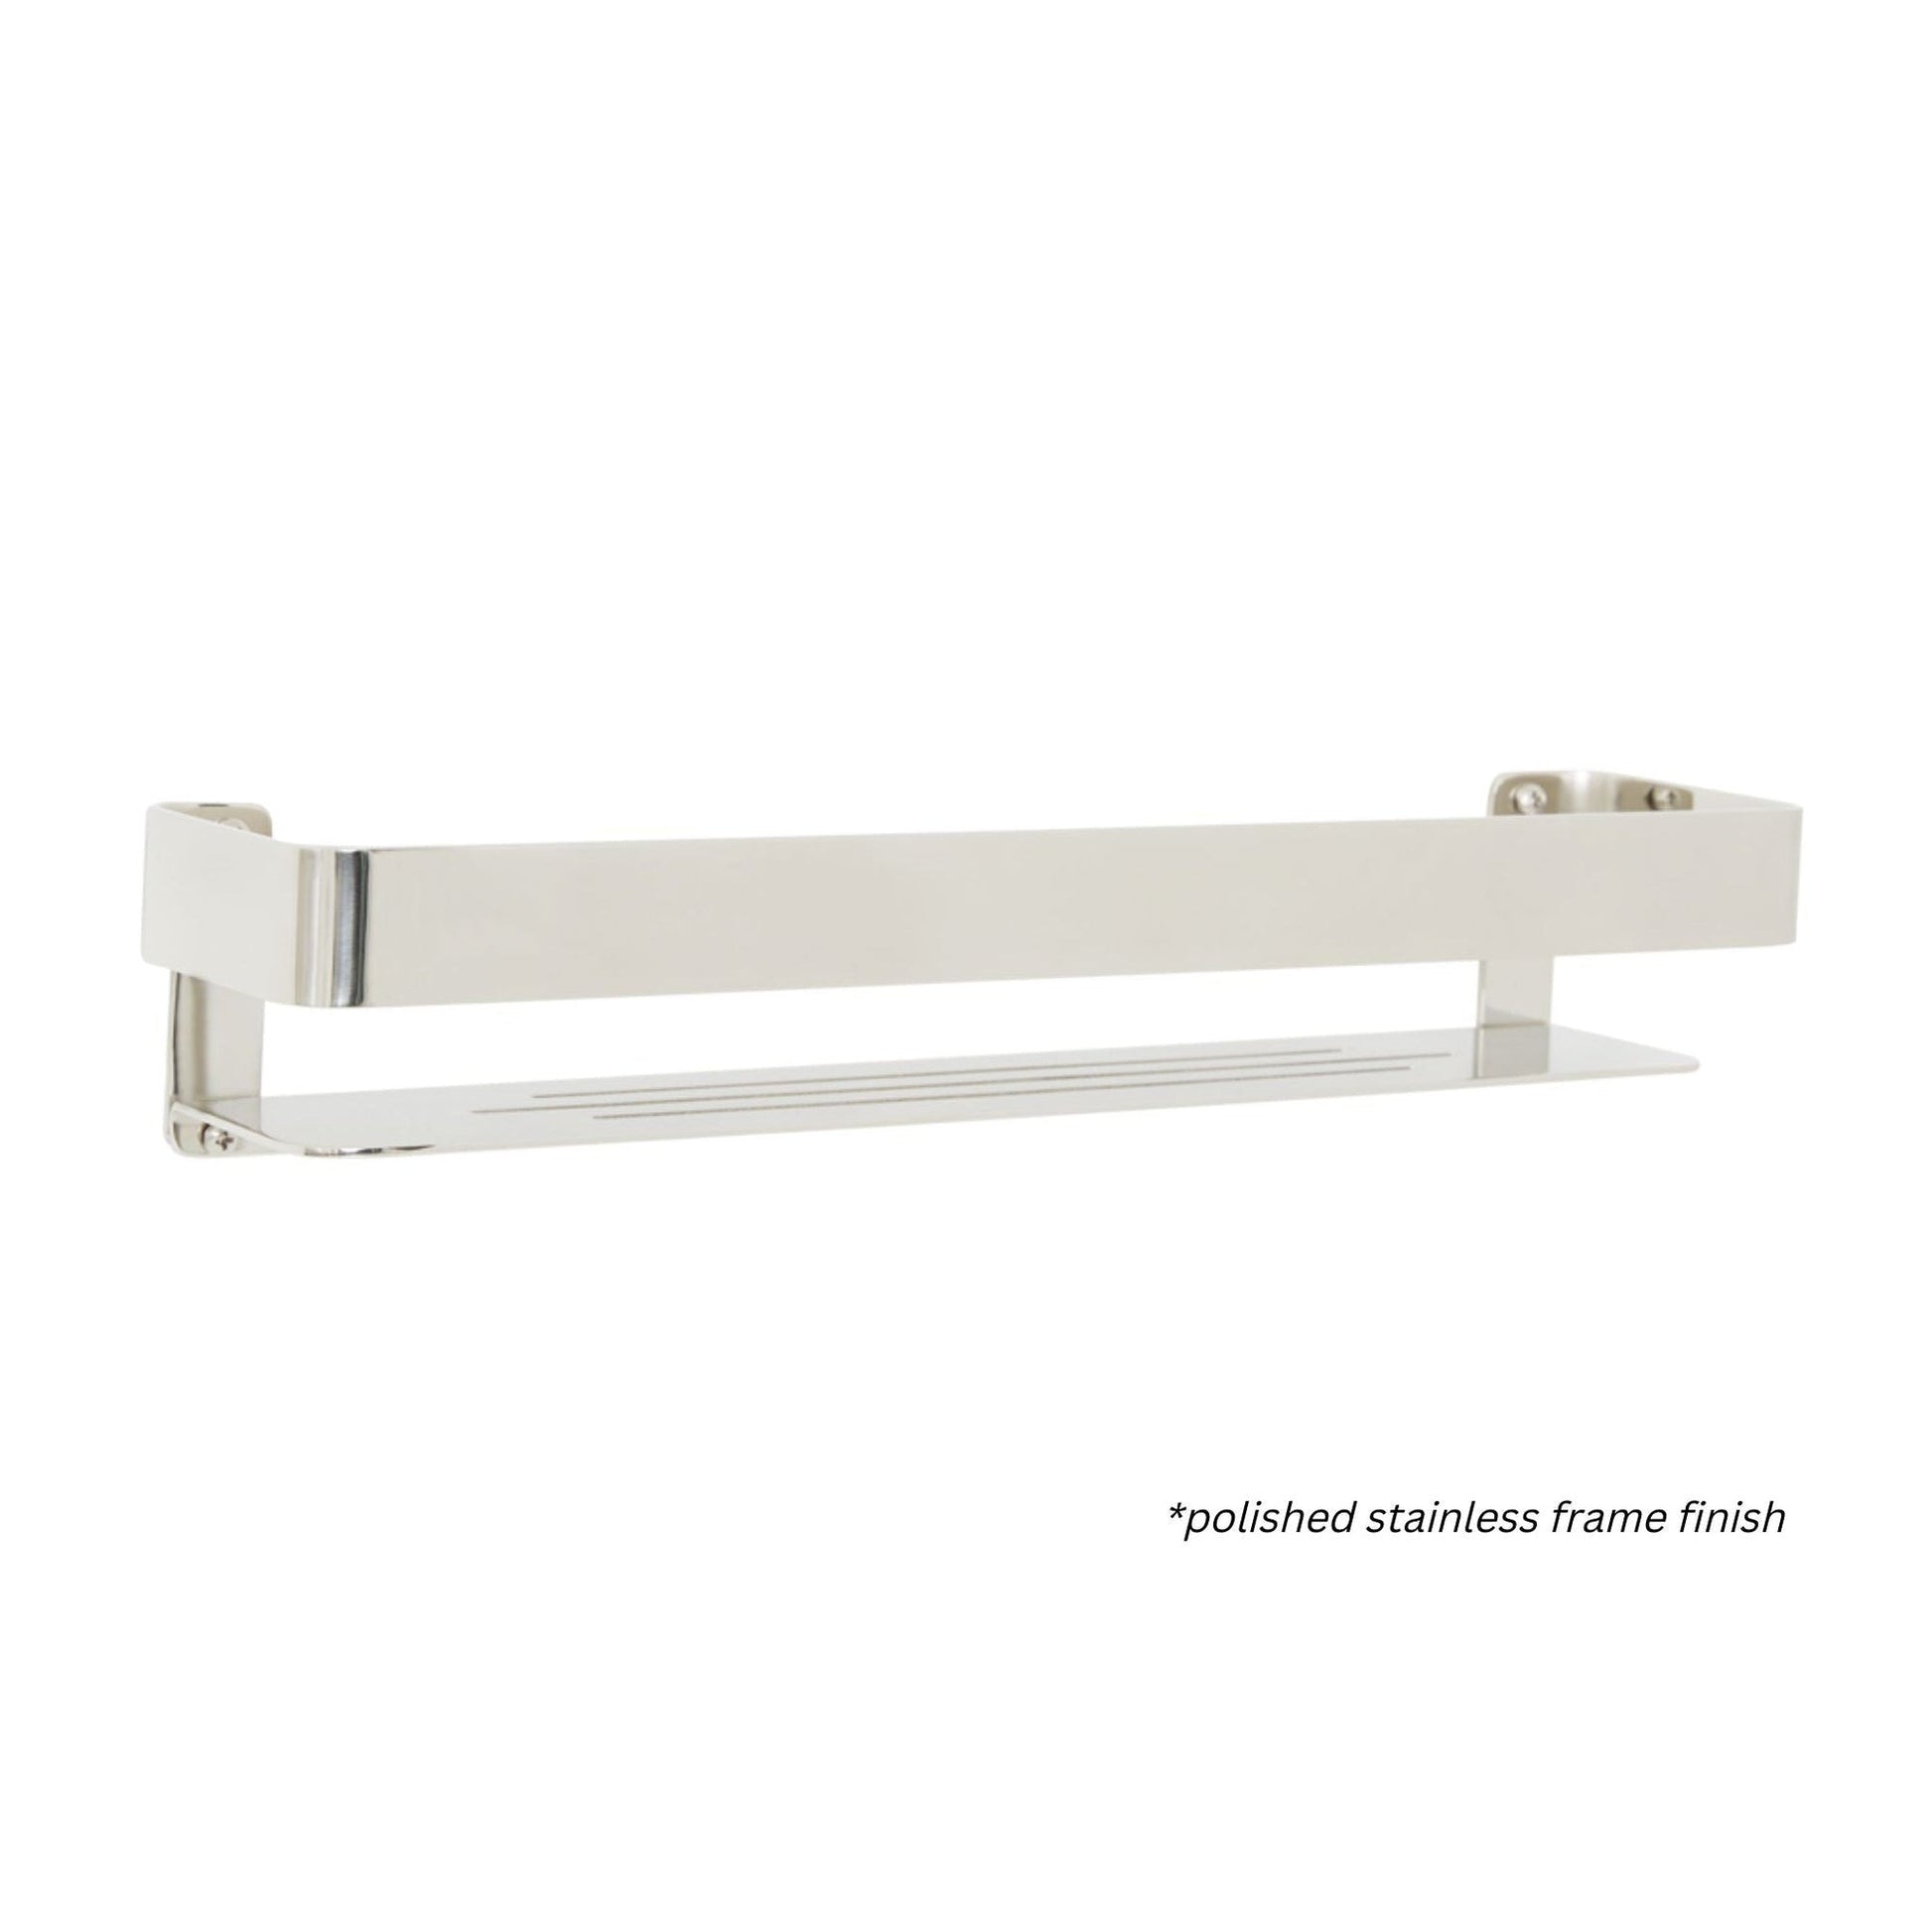 Seachrome Coronado 700 Series 18" x 4" Rectangular Shower Shelf With Rail in Almond Powder Coated Stainless Steel Finish